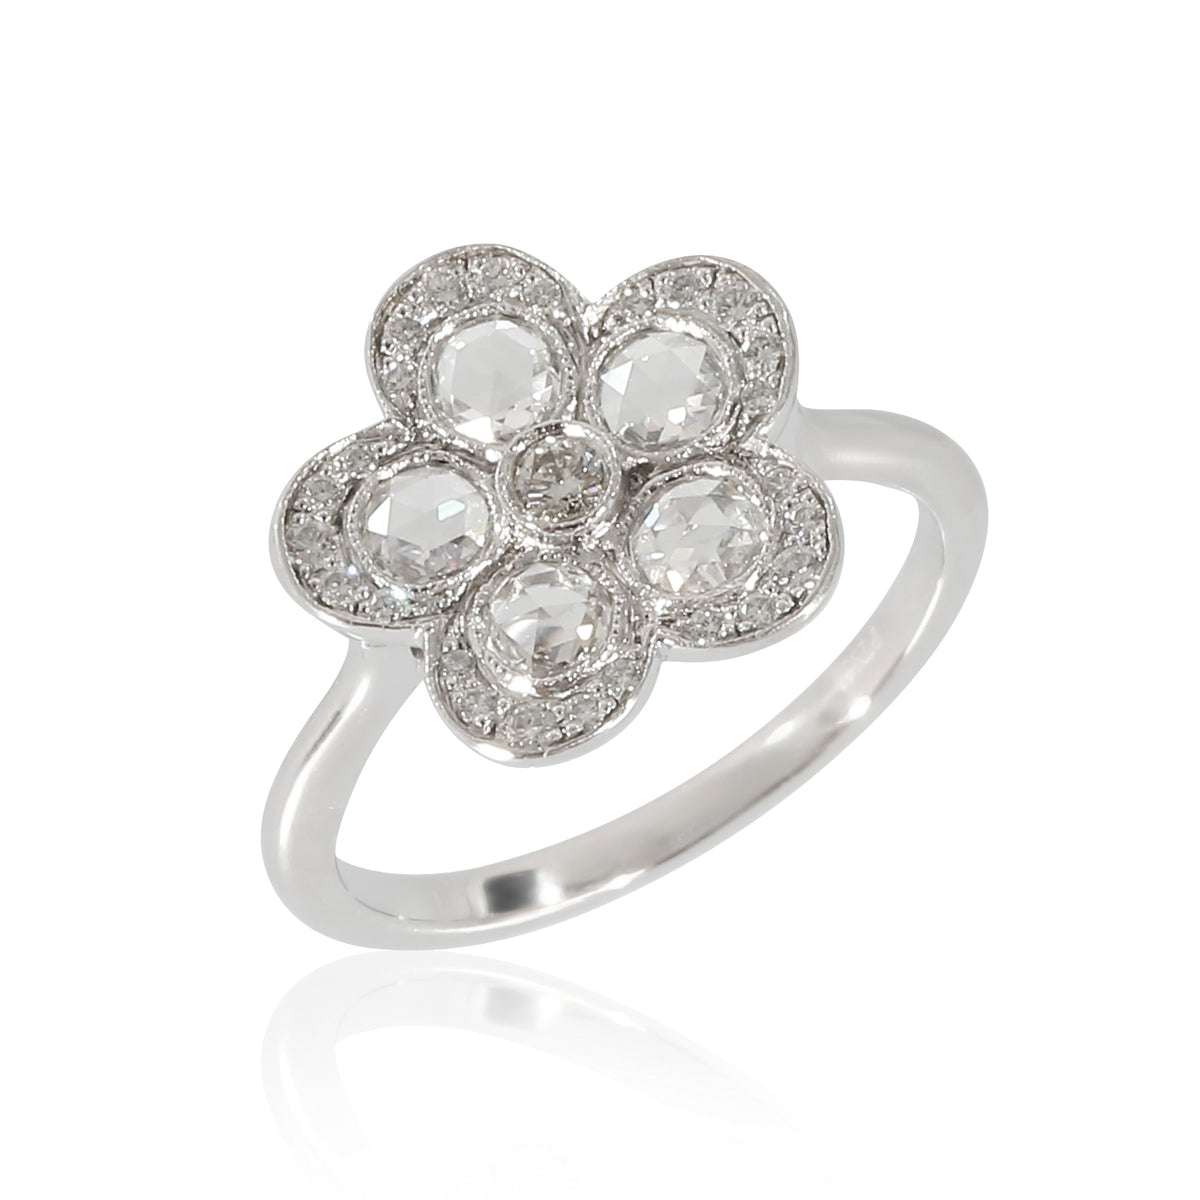 Tiffany & Co. Enchant Diamond Flower Ring in Platinum 3.88 CTW